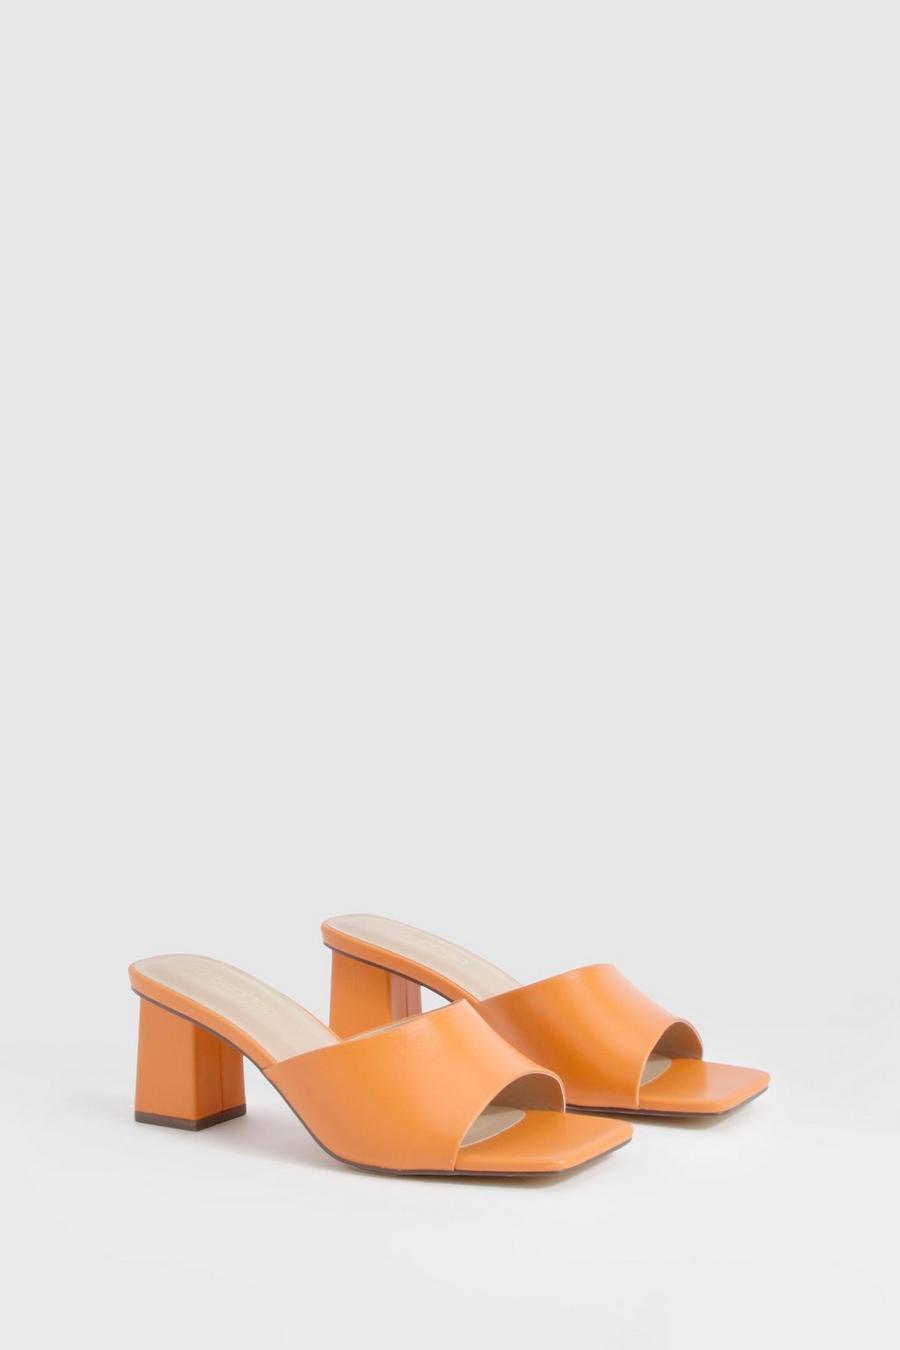 Mules a calzata ampia a punta quadrata con tacco basso a blocco, Orange